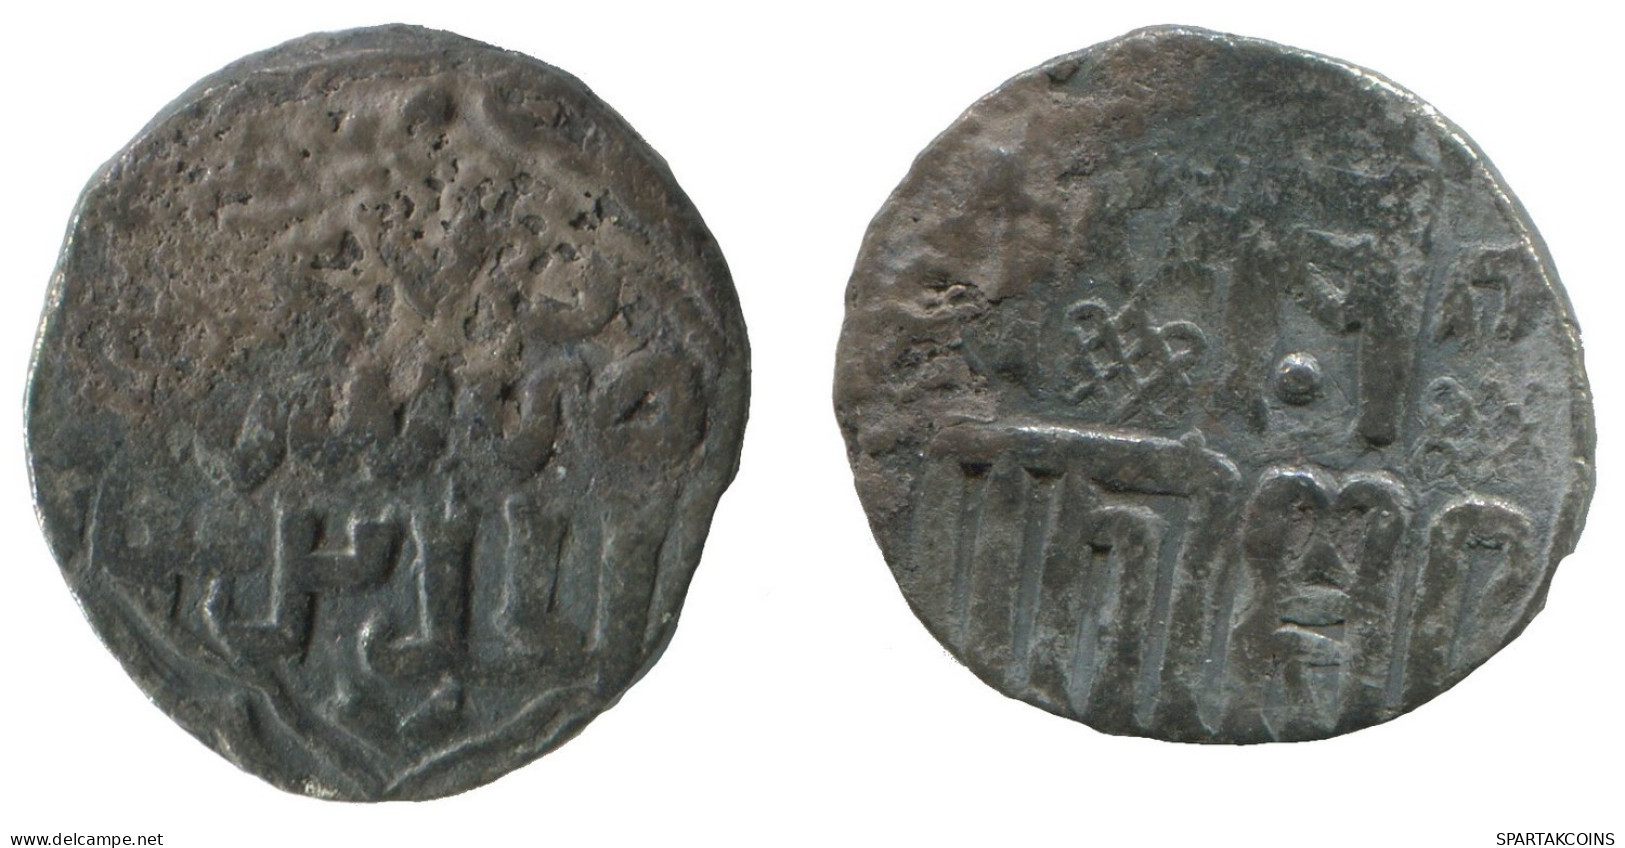 GOLDEN HORDE Silver Dirham Medieval Islamic Coin 1.5g/17mm #NNN2003.8.U.A - Islamische Münzen